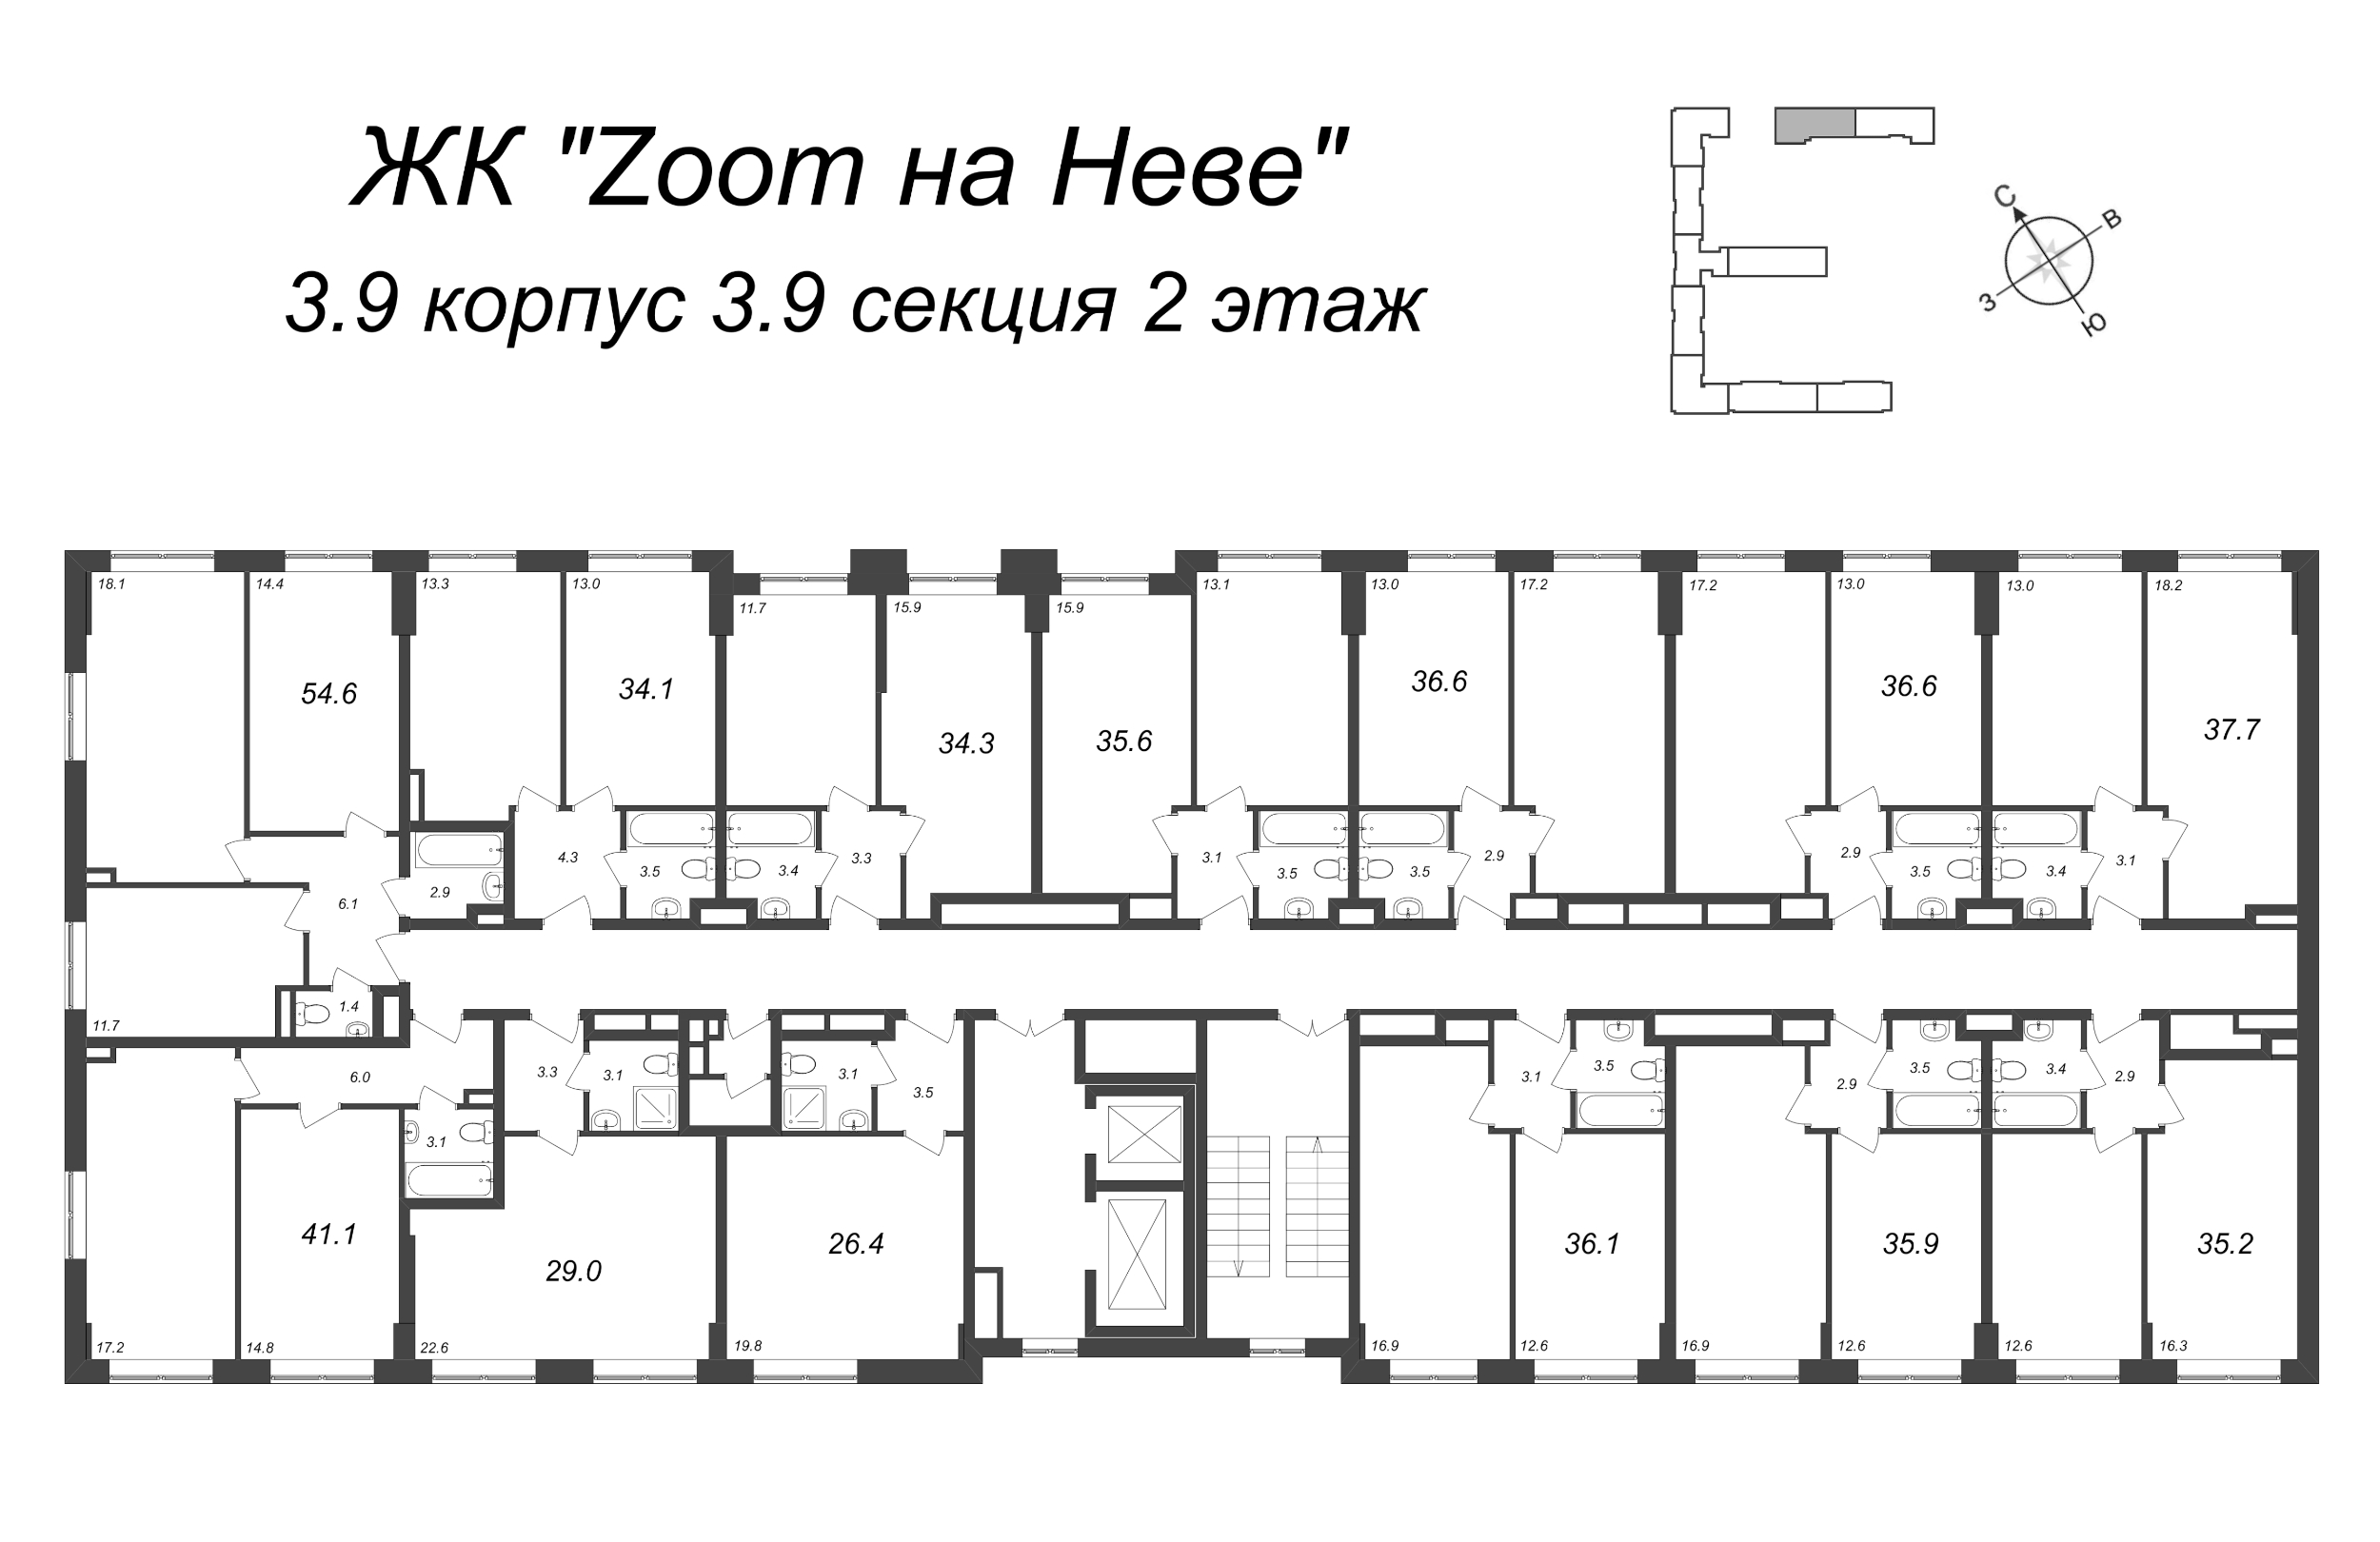 2-комнатная (Евро) квартира, 34.78 м² - планировка этажа